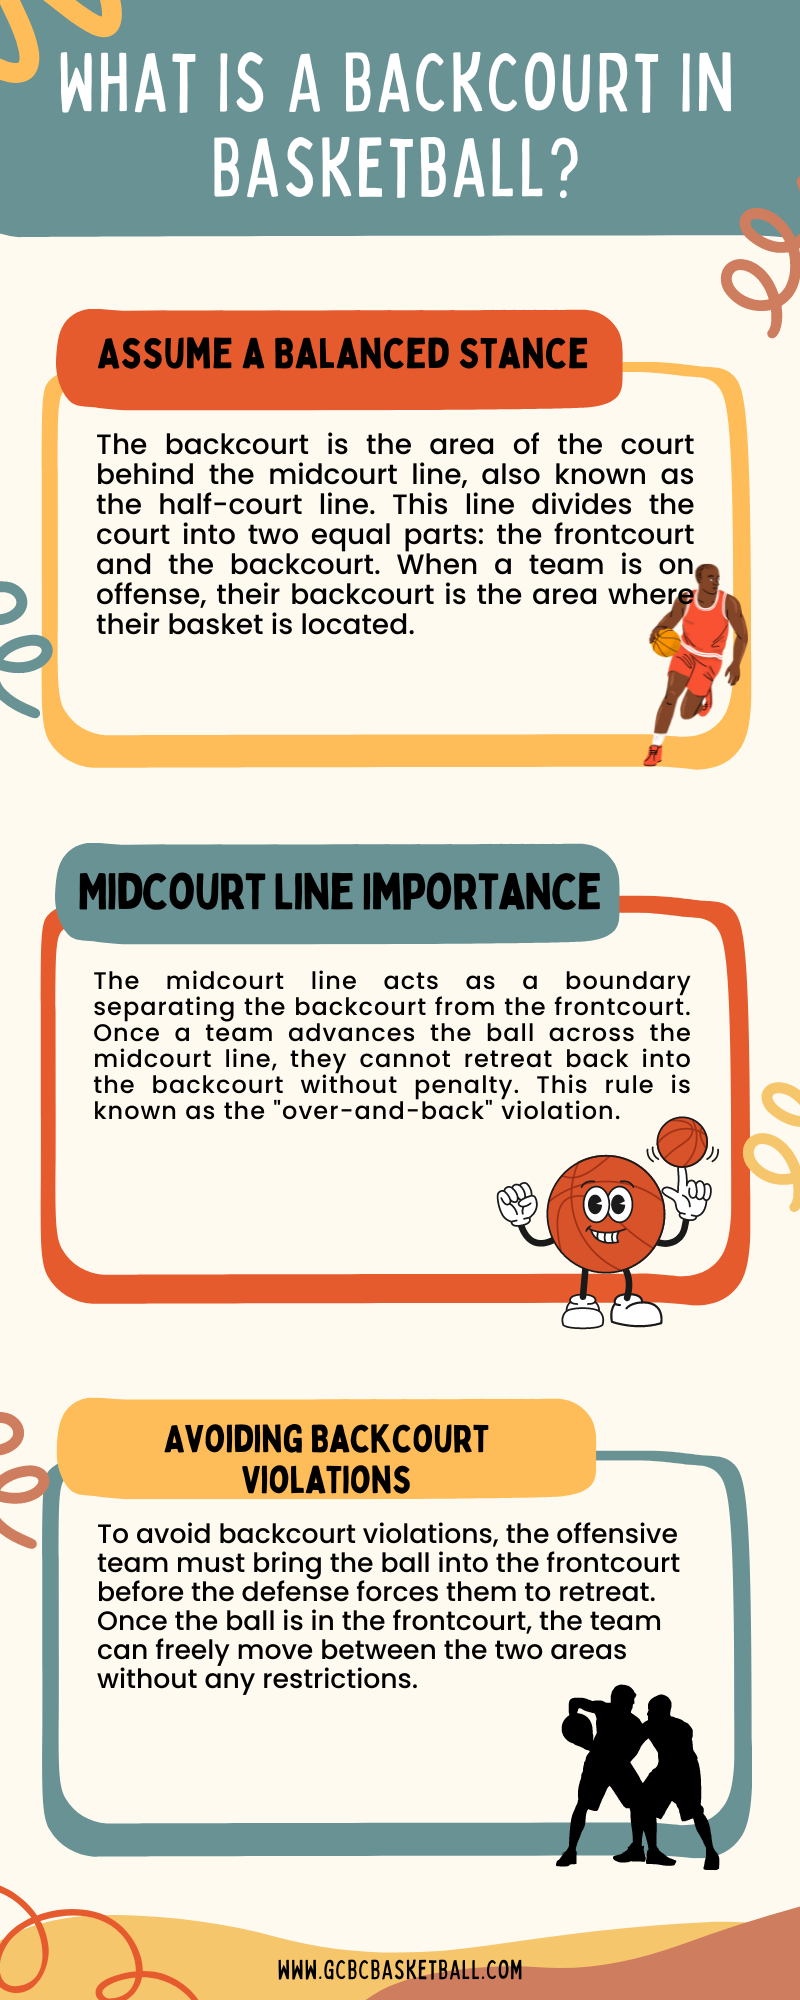 Basics of a backcourt